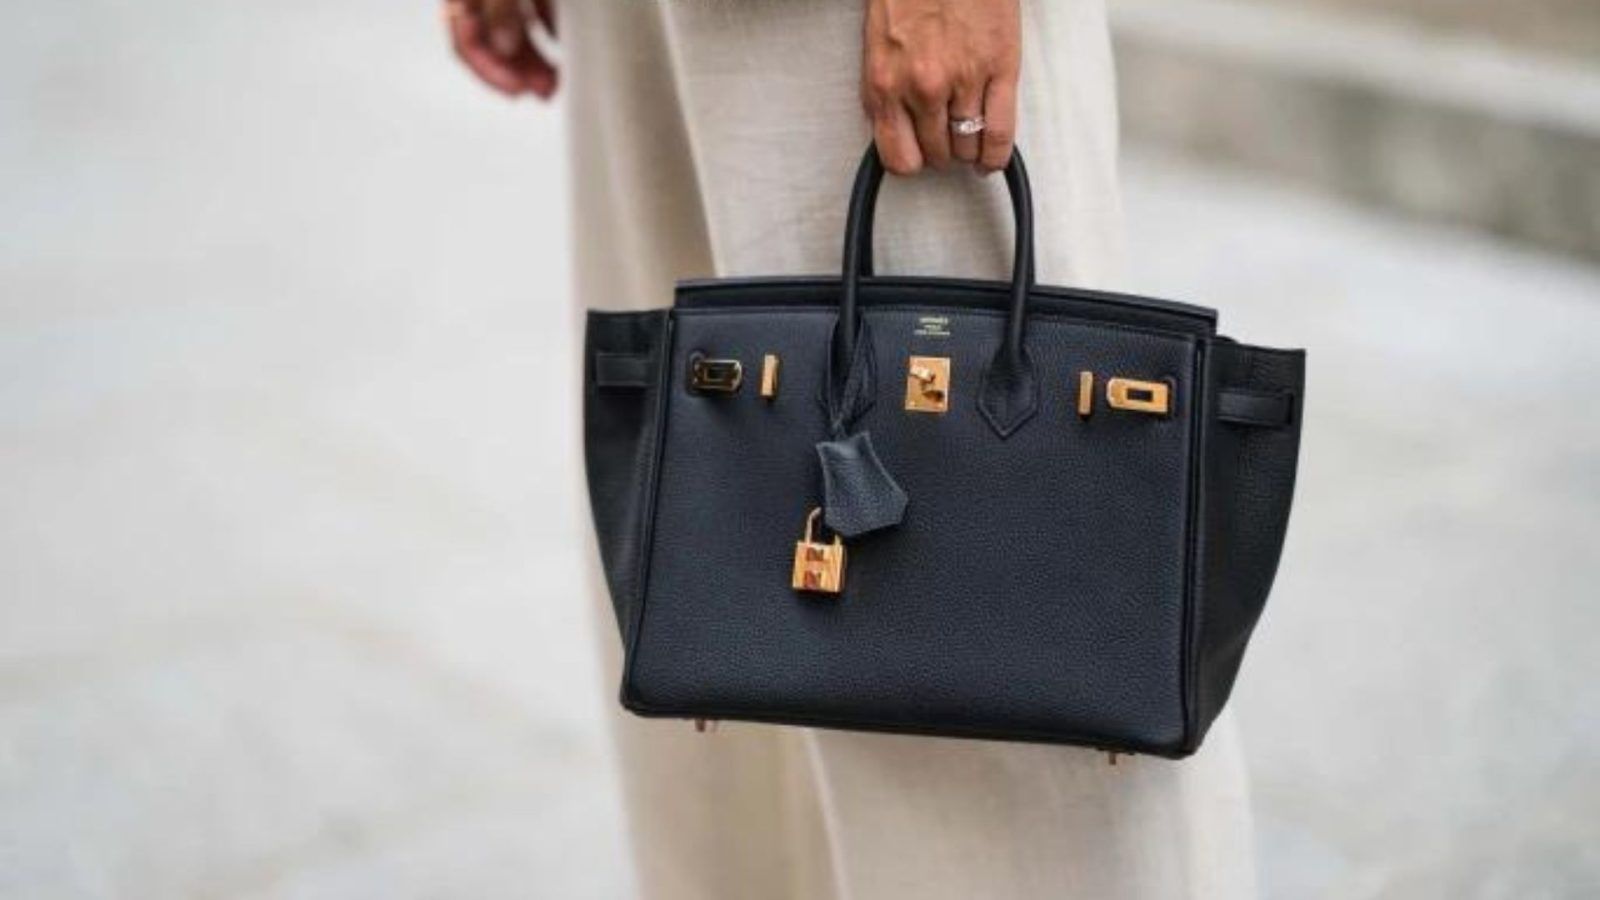 Hermès Birkin bag is the most coveted luxury handbag in the world